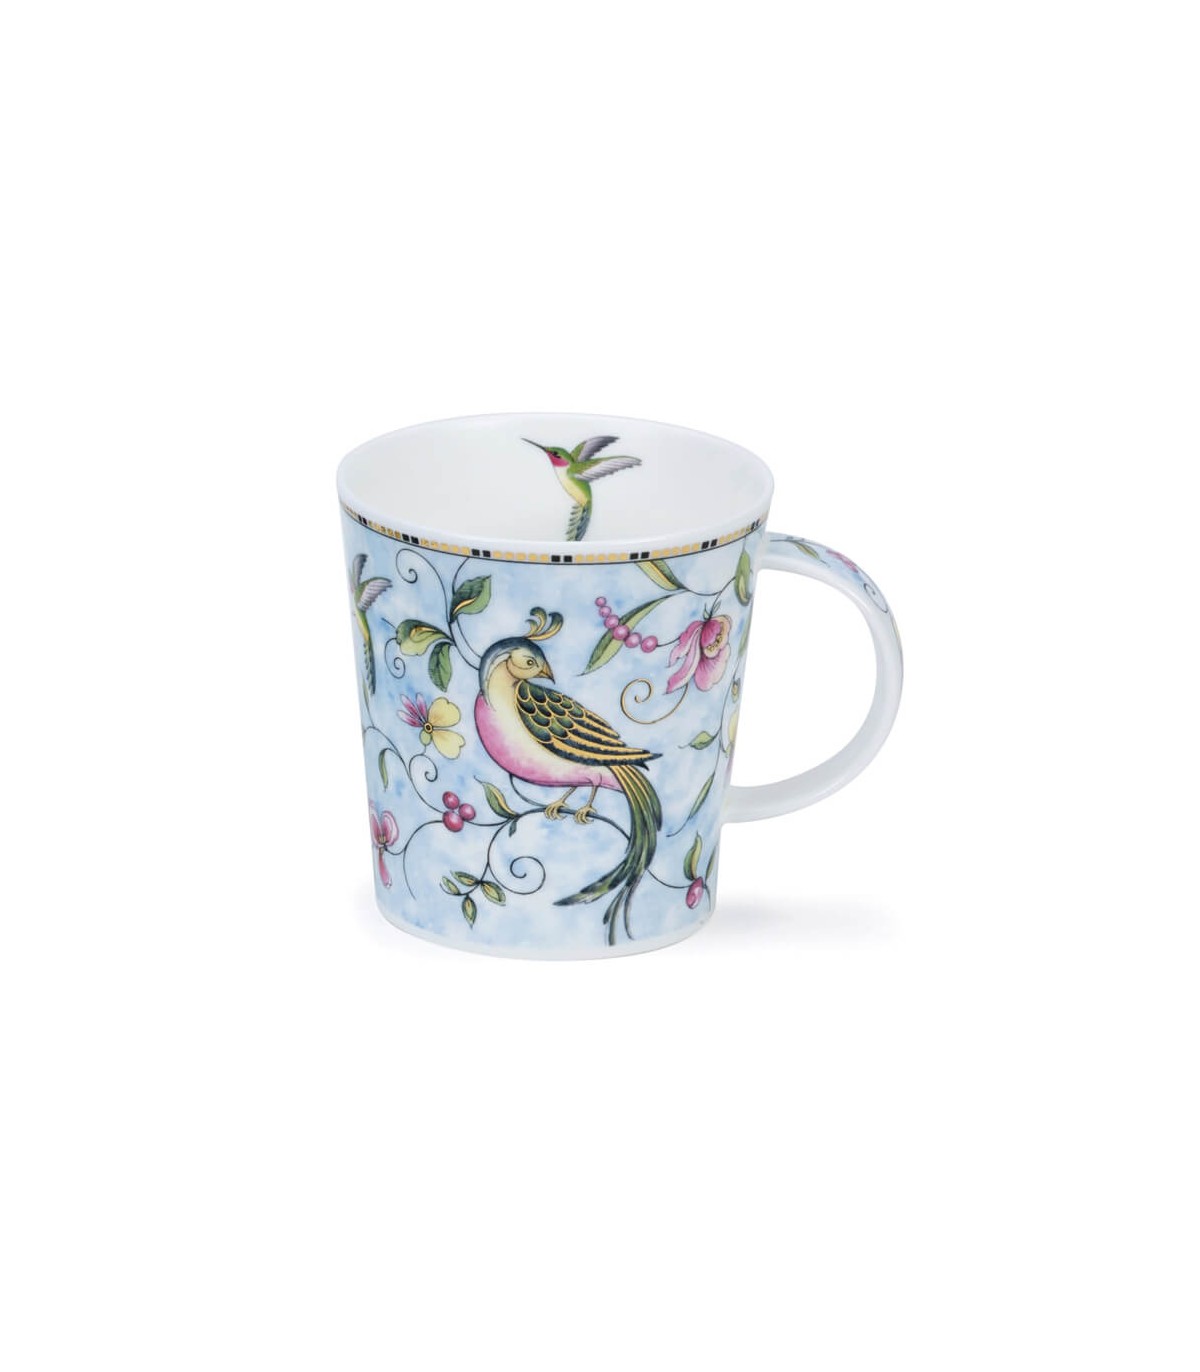 Avalon Bird by Dunoon | The Tea Haus